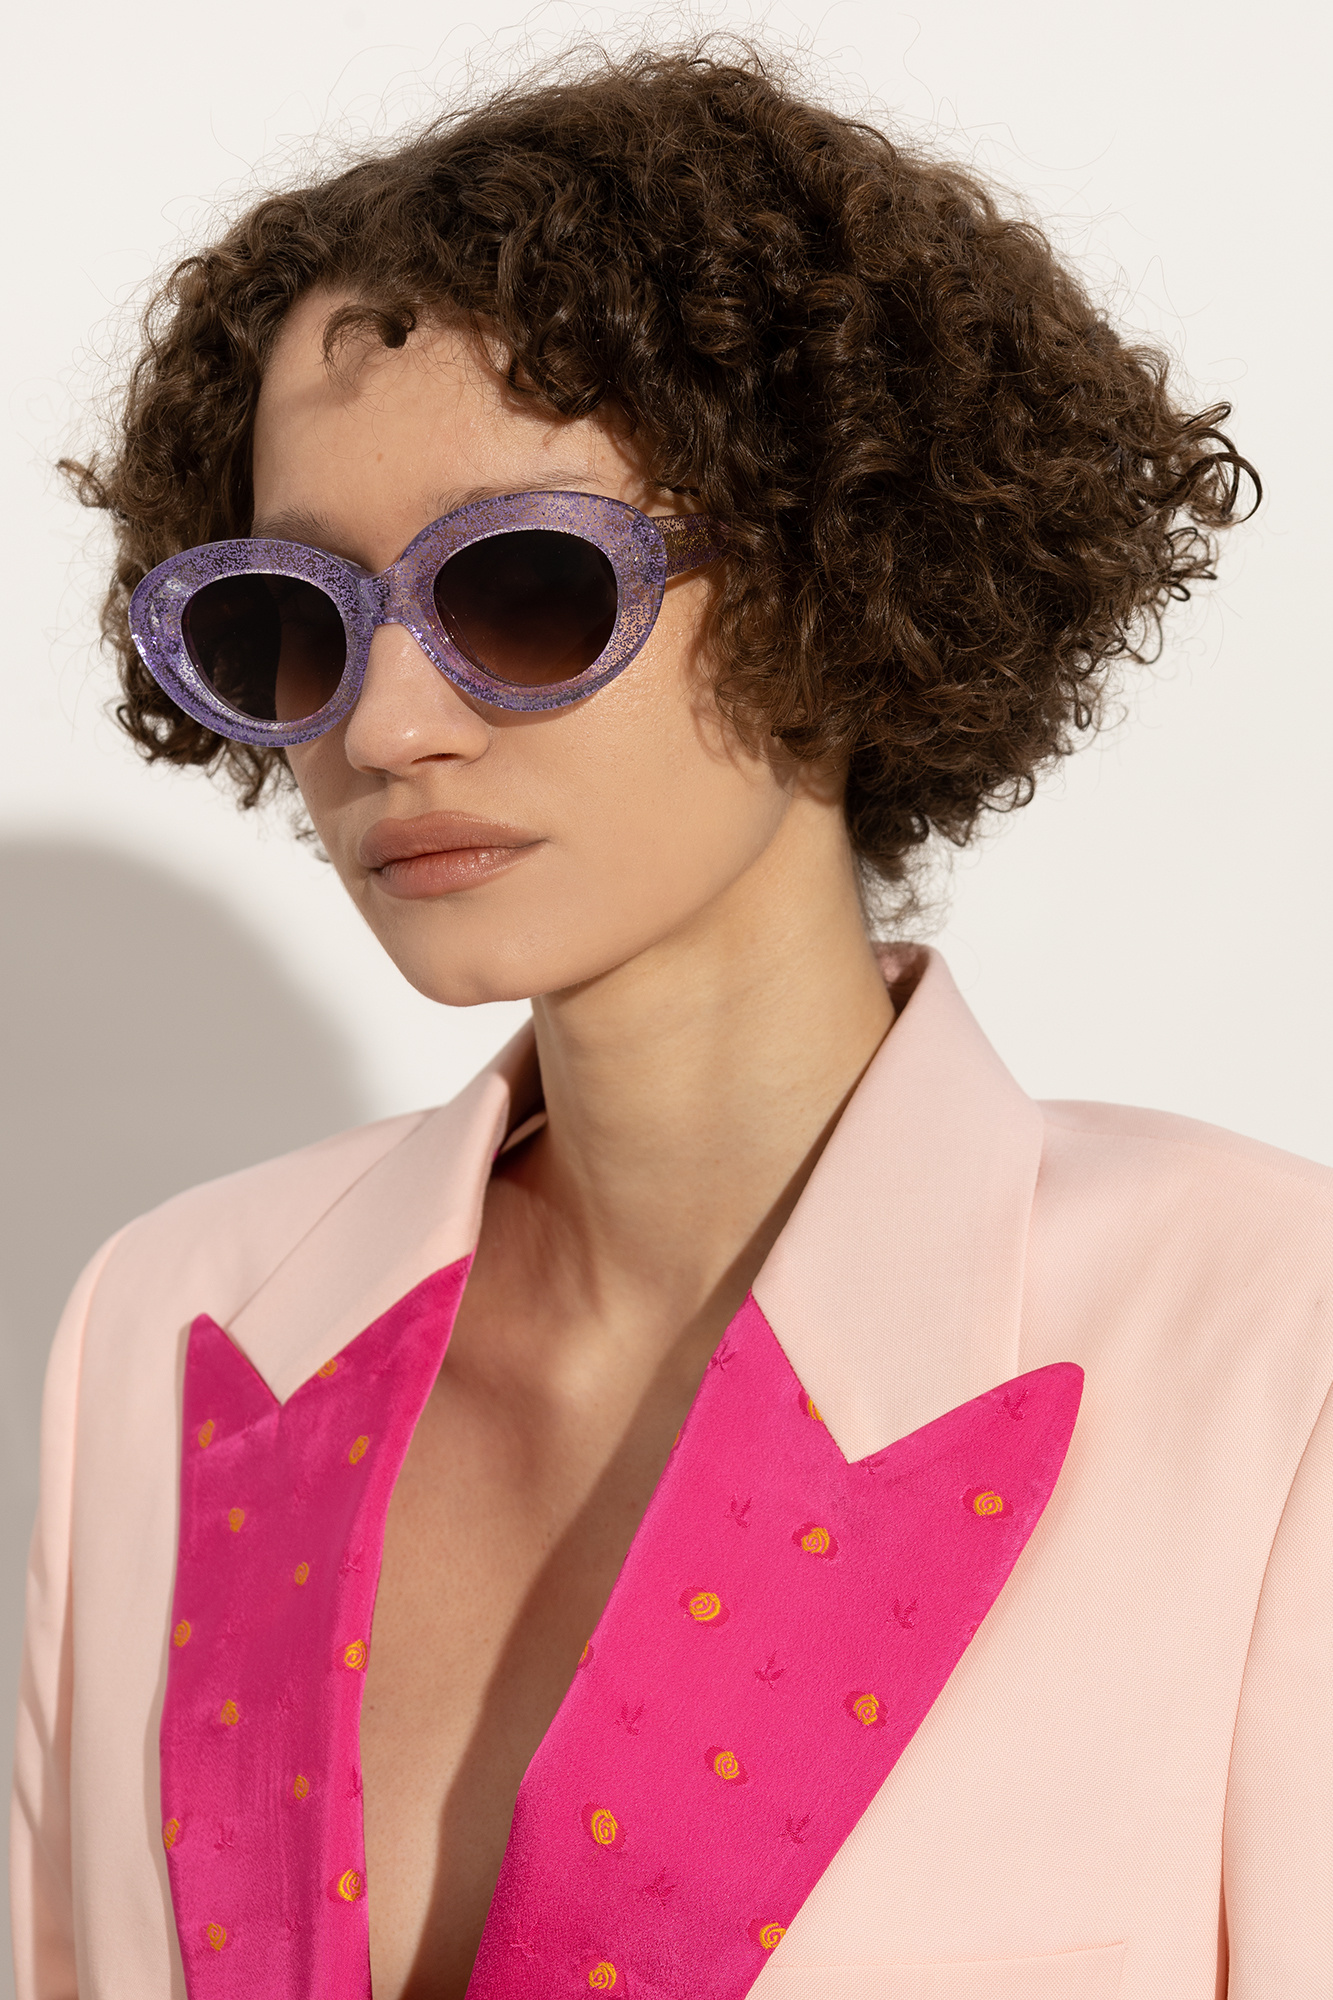 Emmanuelle Khanh ‘Gigi’ sunglasses